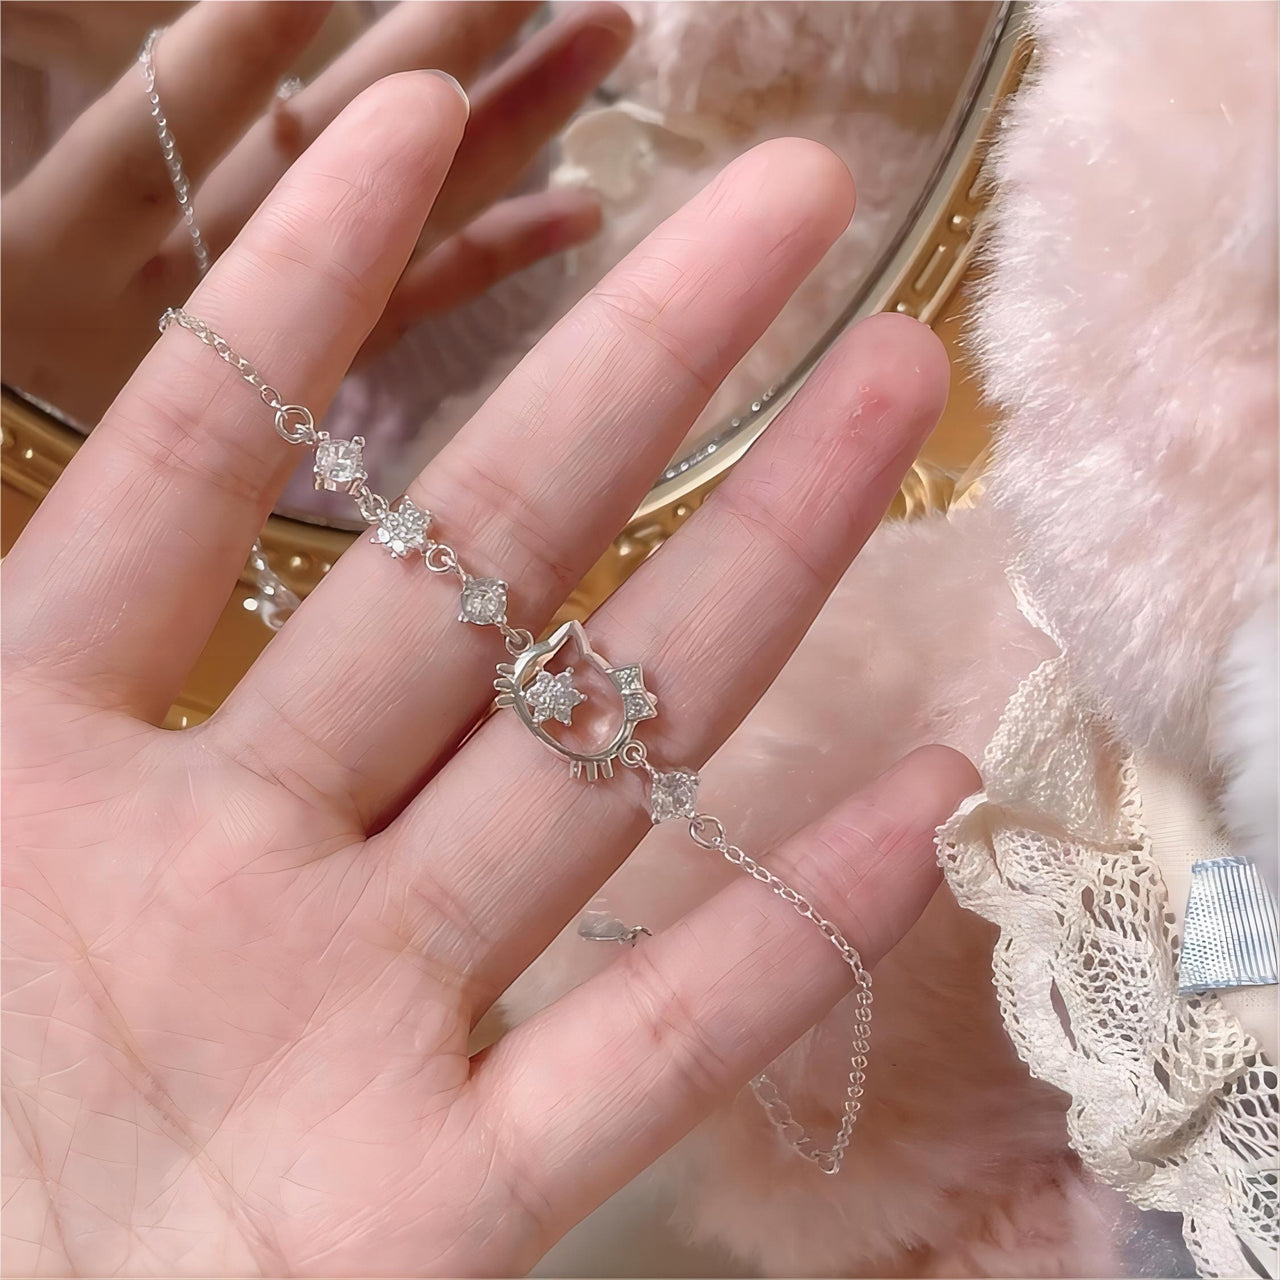 Sanrio Kuromi Kawaii Hello Kitty Charm Solid 925 Silver Bracelet